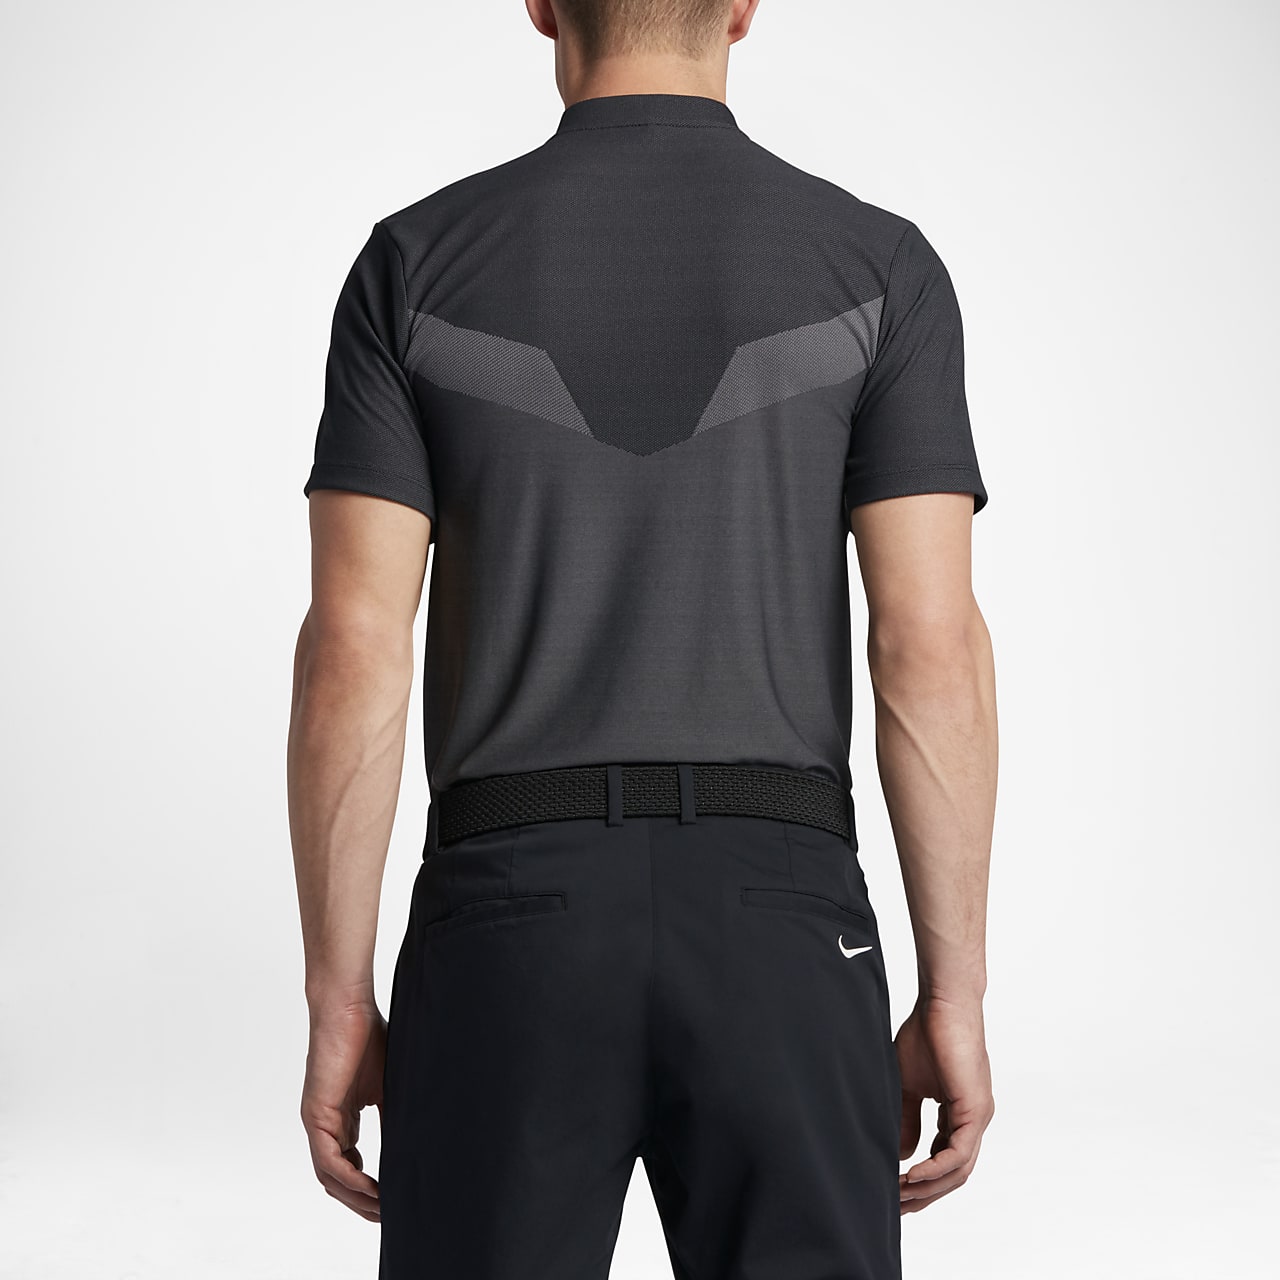 Nike Zonal Cooling Men's Slim Fit Golf Nike ID